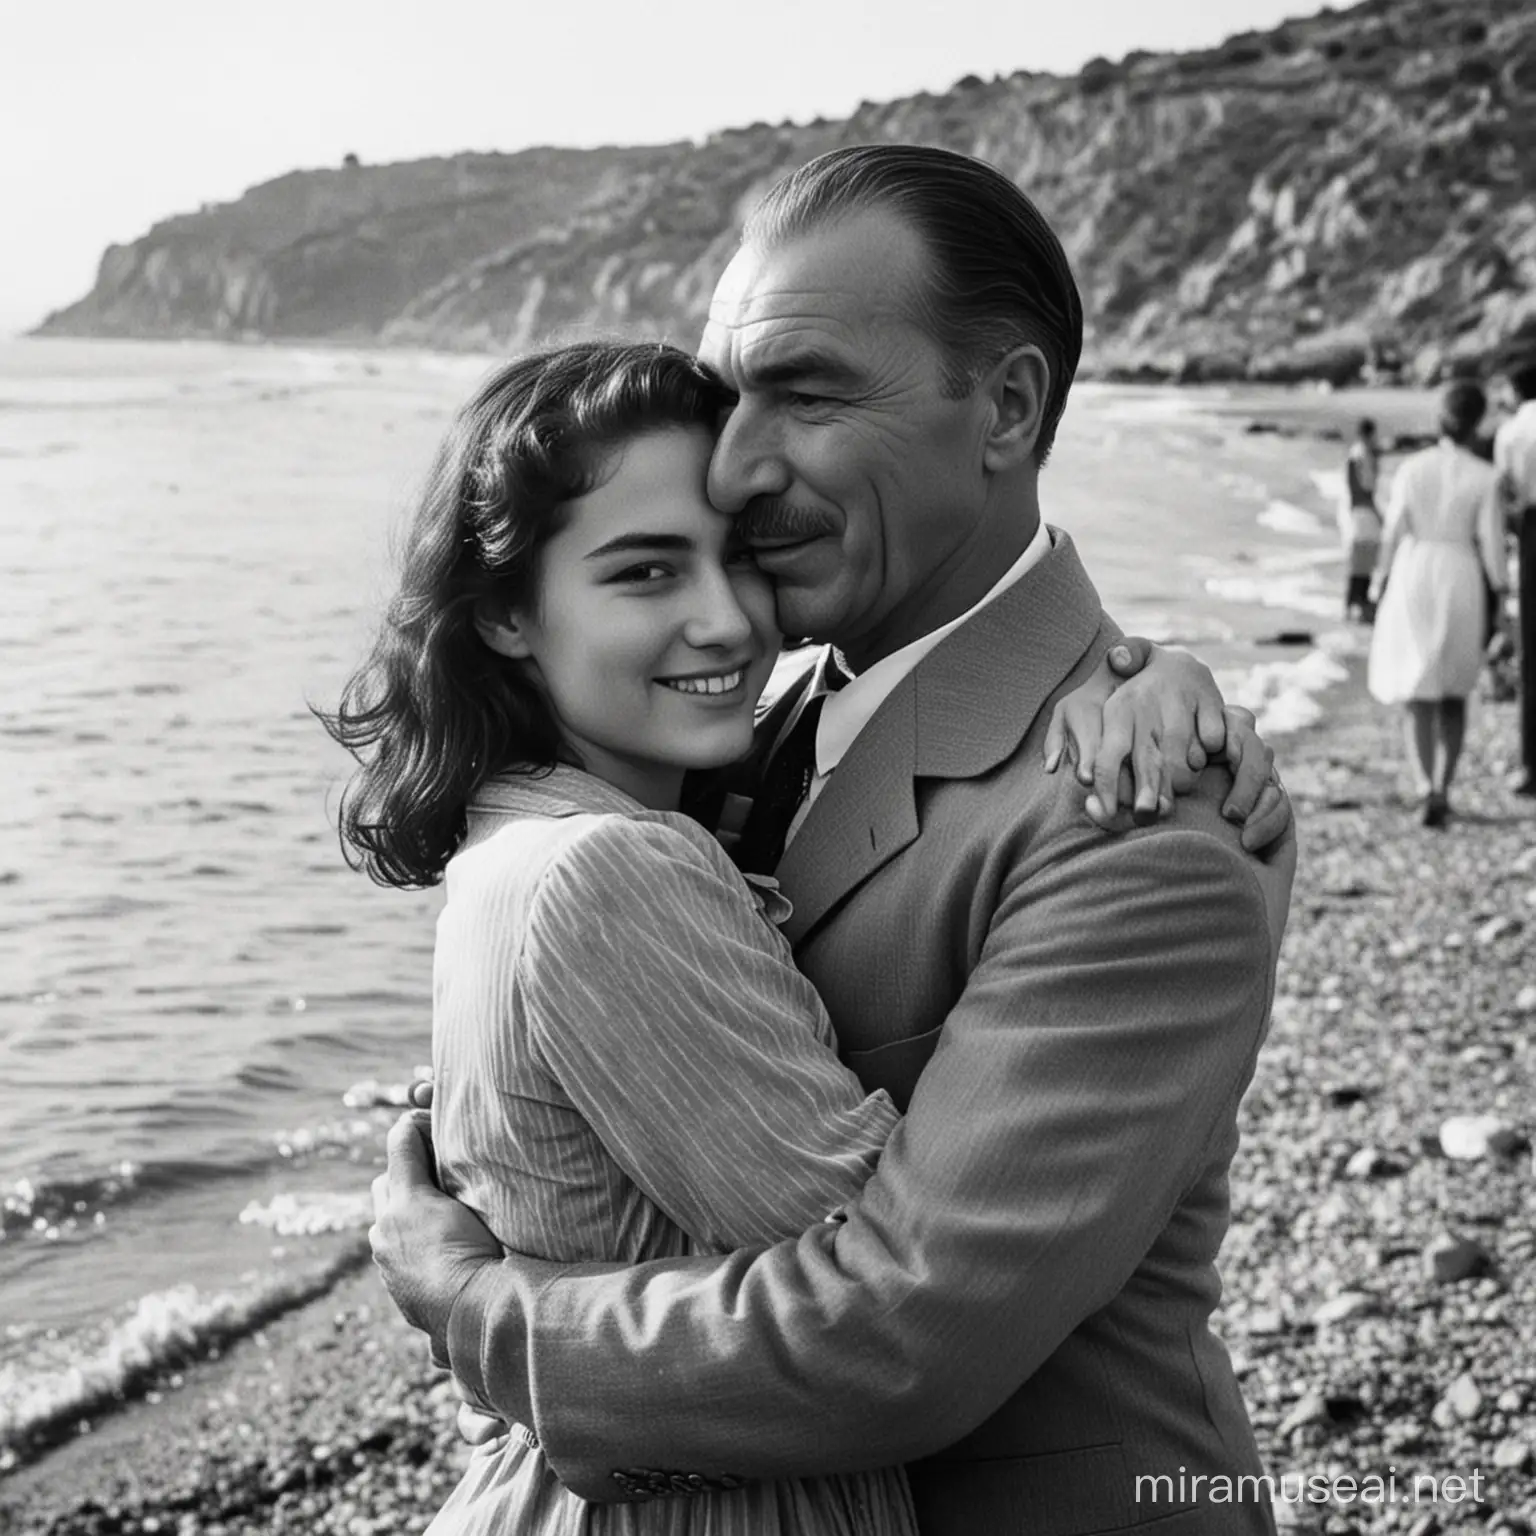 Mustafa Kemal Atatrk Embraces a Joyful Woman by the Sea